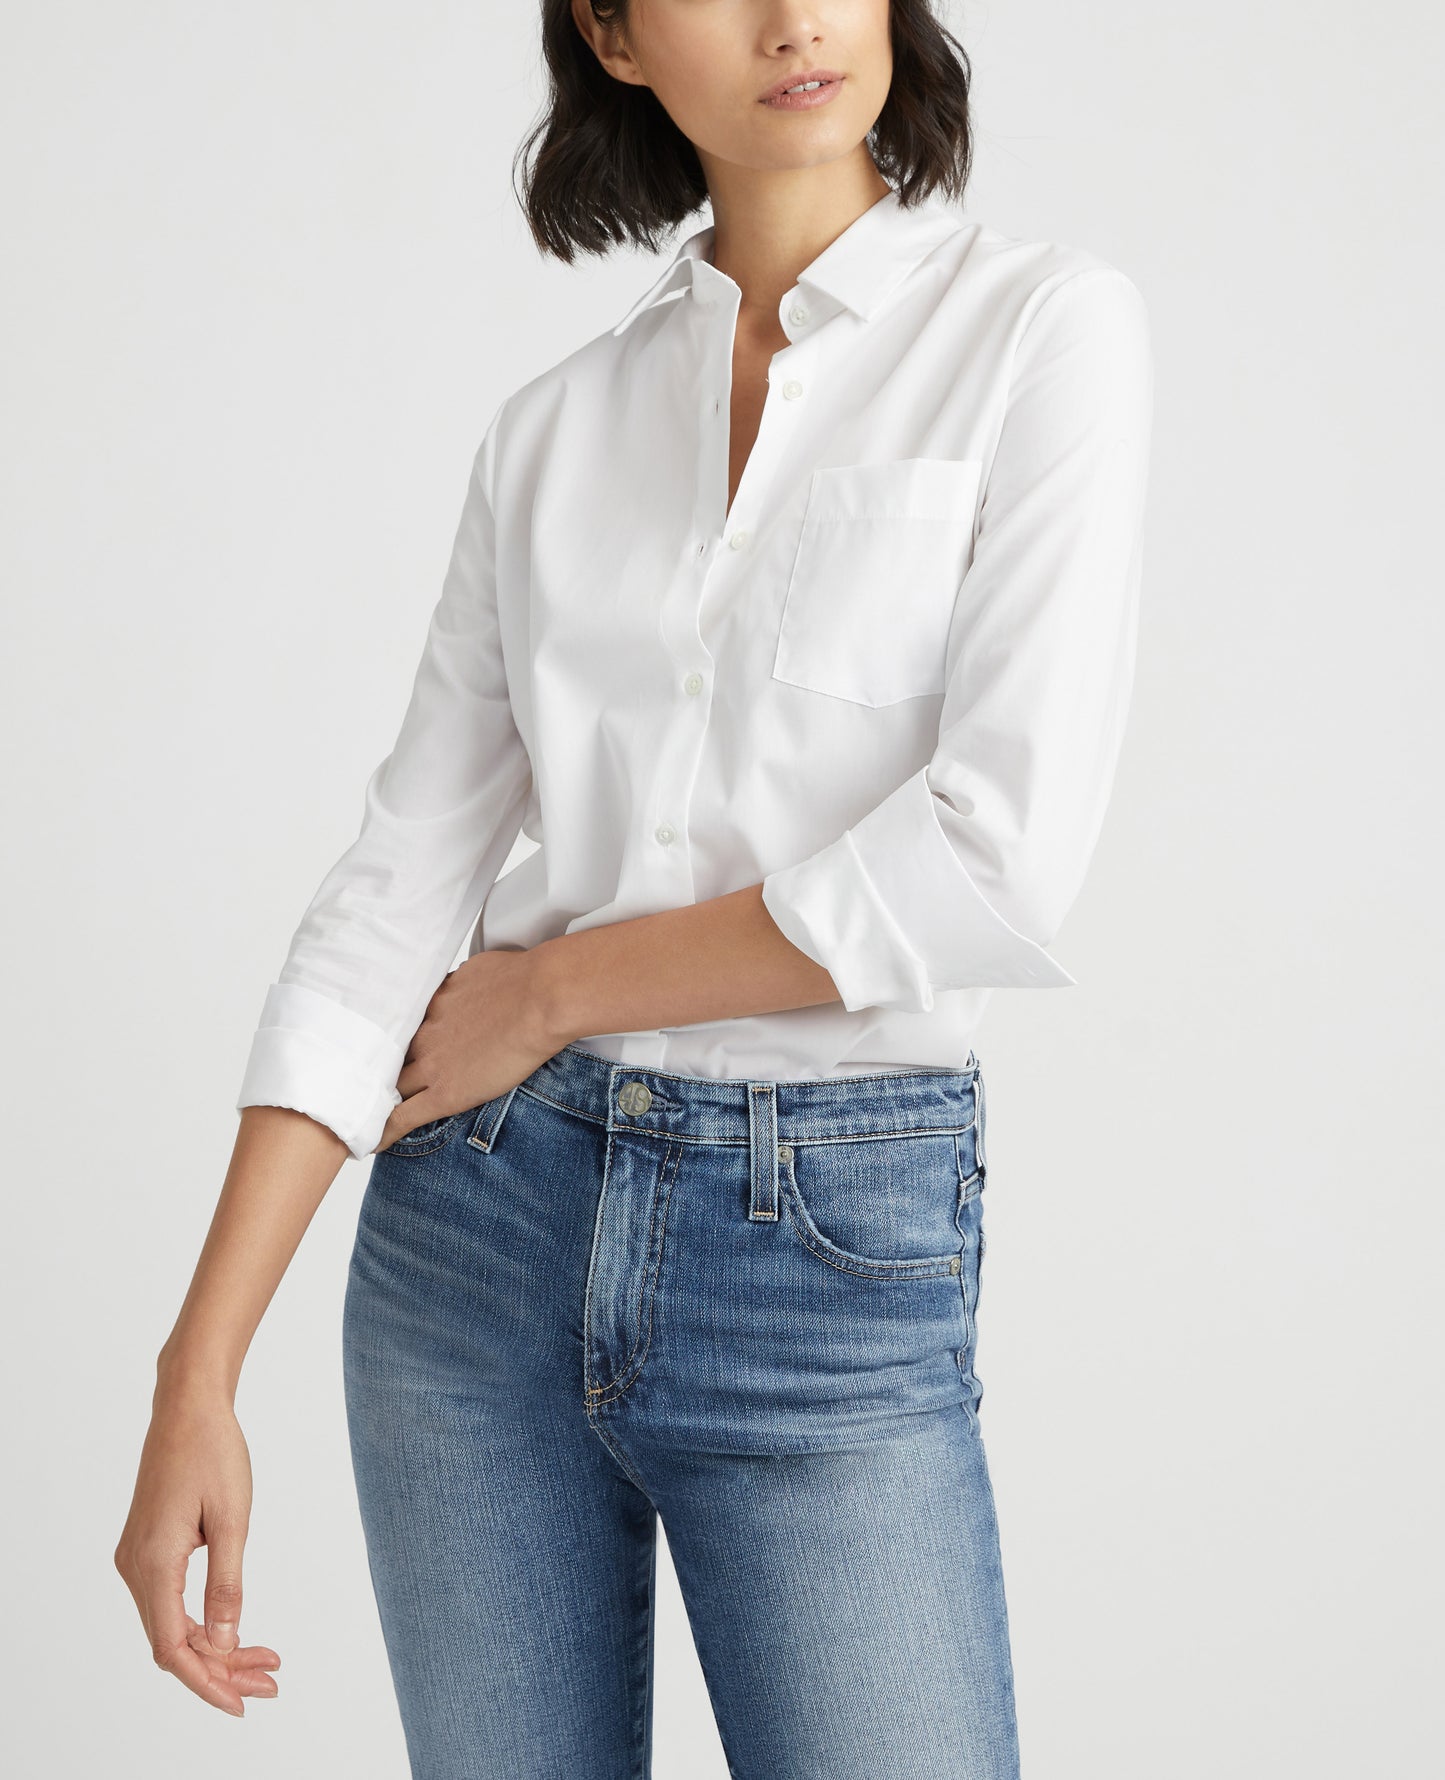 Cade Shirt True White Classic Button Up Shirt Women Tops Photo 1